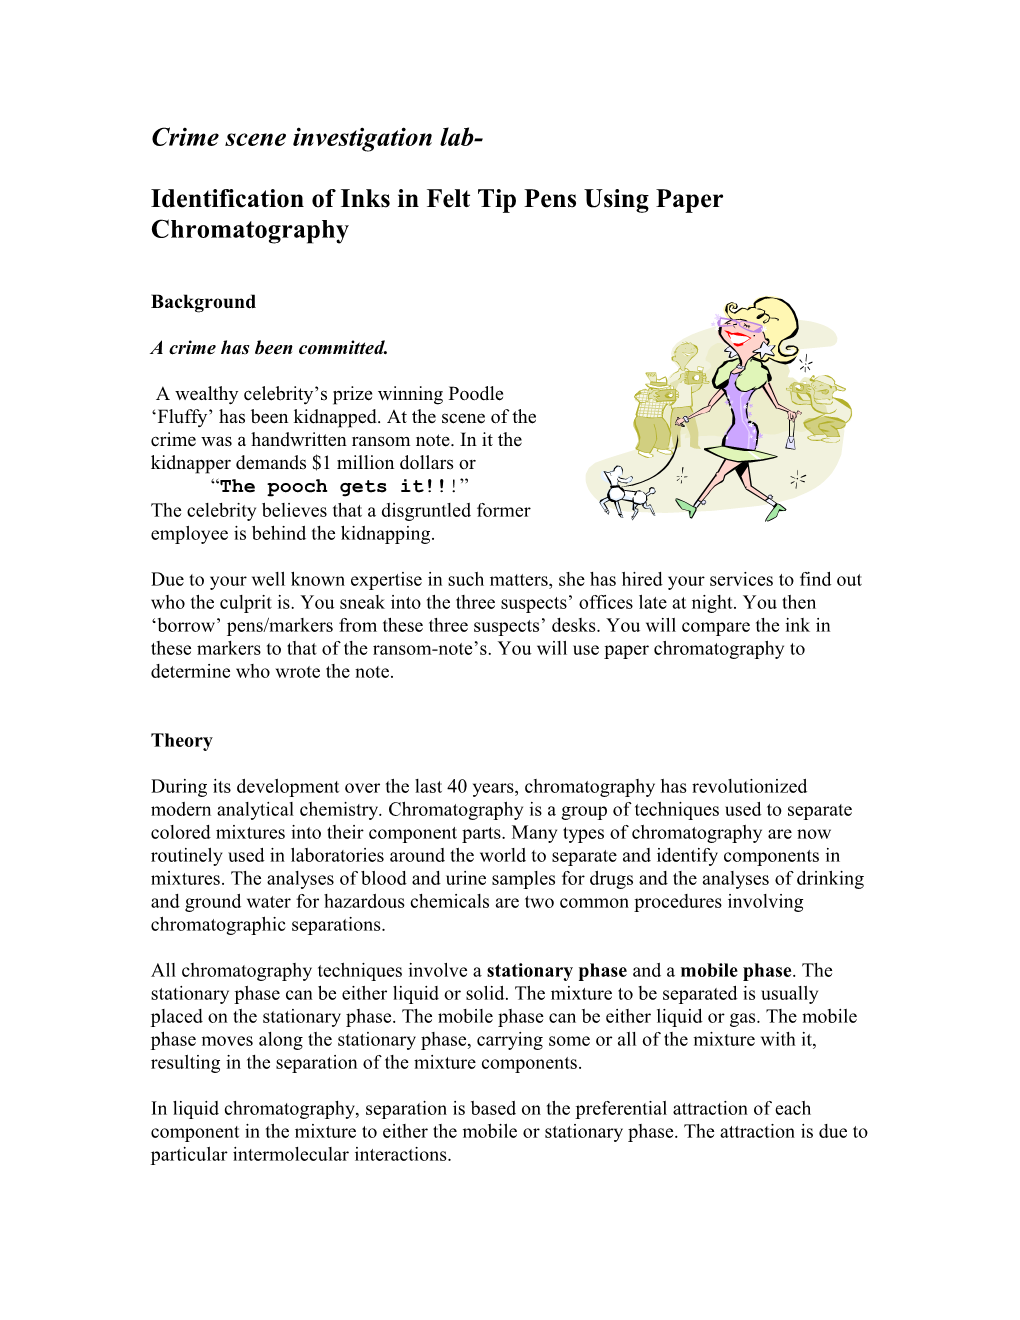 Identification of Inks in Felt Tip Pens Using Paper Chromatography